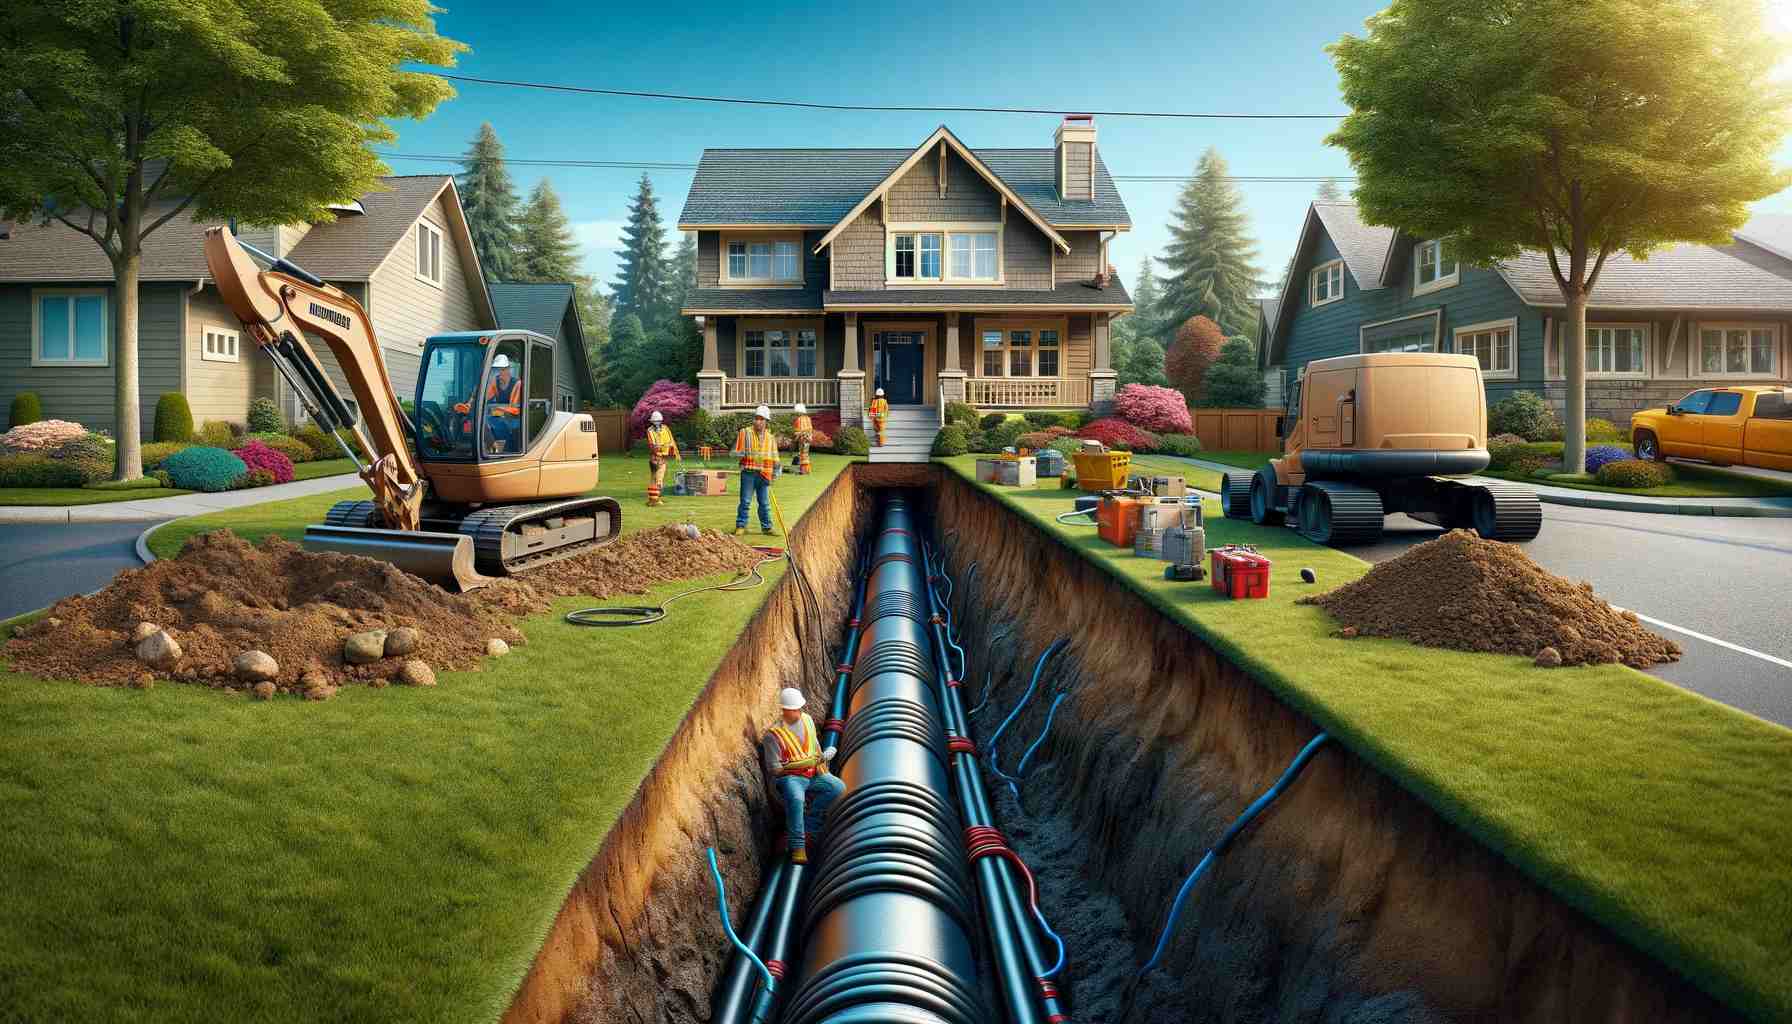 Suburban Sewer installation for Washington